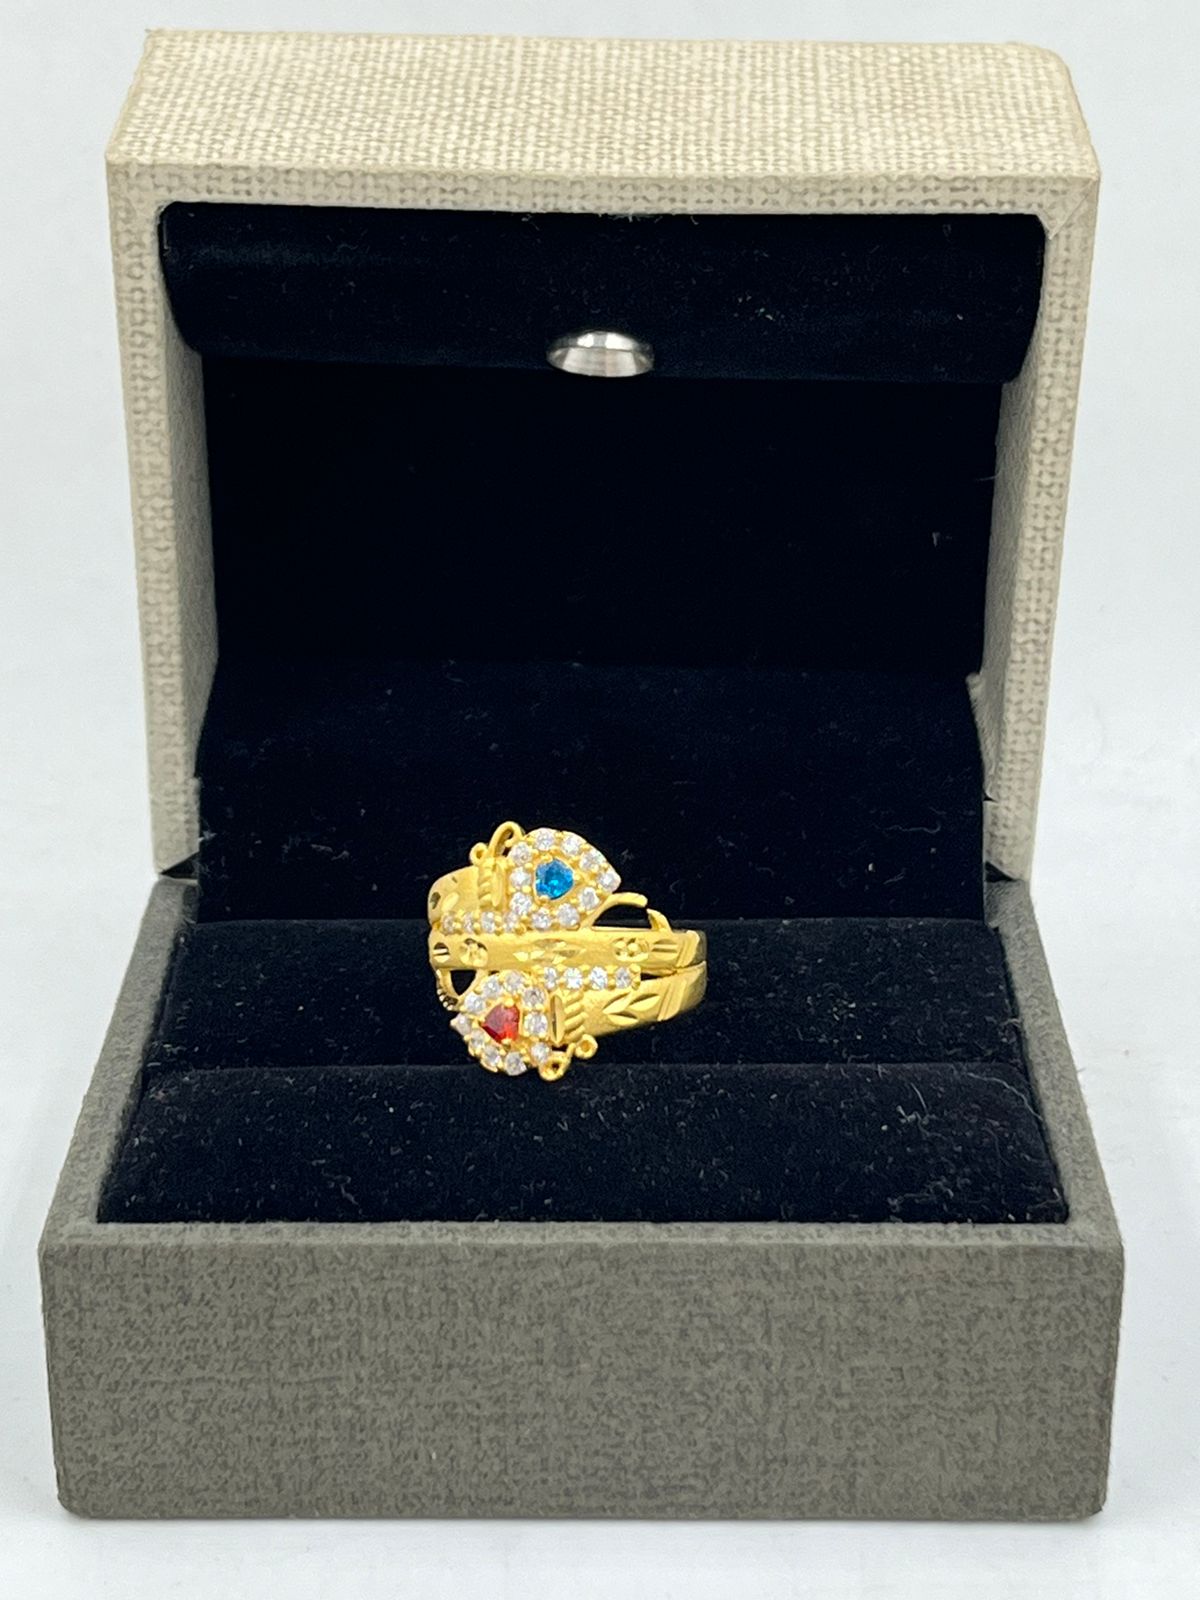 Amazon.com: Ross-Simons Italian 24kt Yellow Gold Fleur-De-Lis 1-Gram Ingot  Ring With 14kt Yellow Gold Band. Size 5: Clothing, Shoes & Jewelry